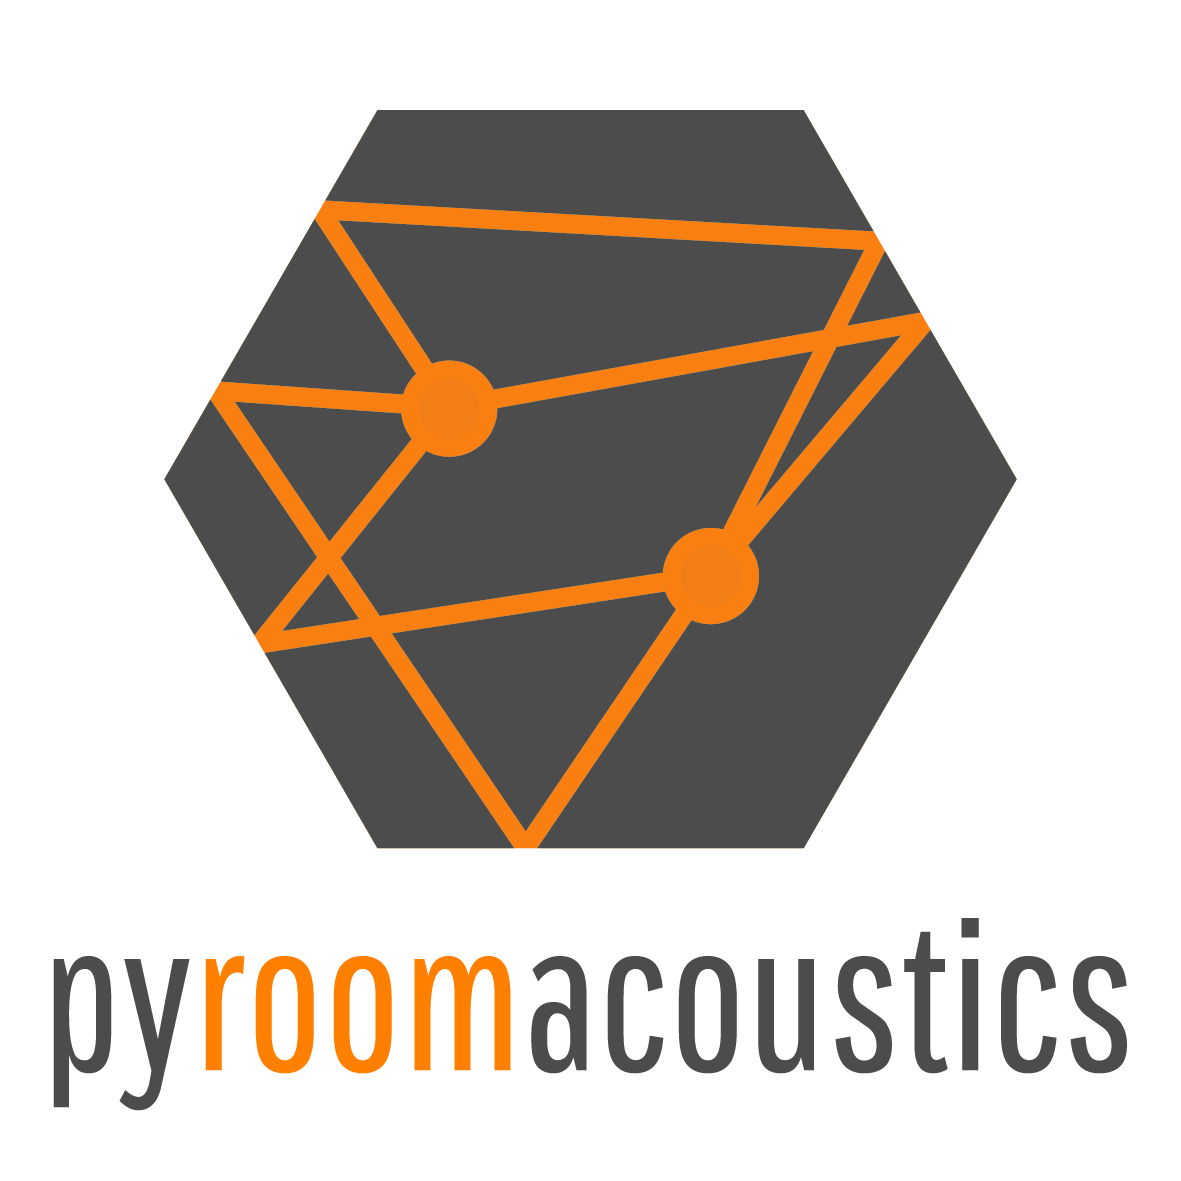 pyroomacoustics_logo_square.png